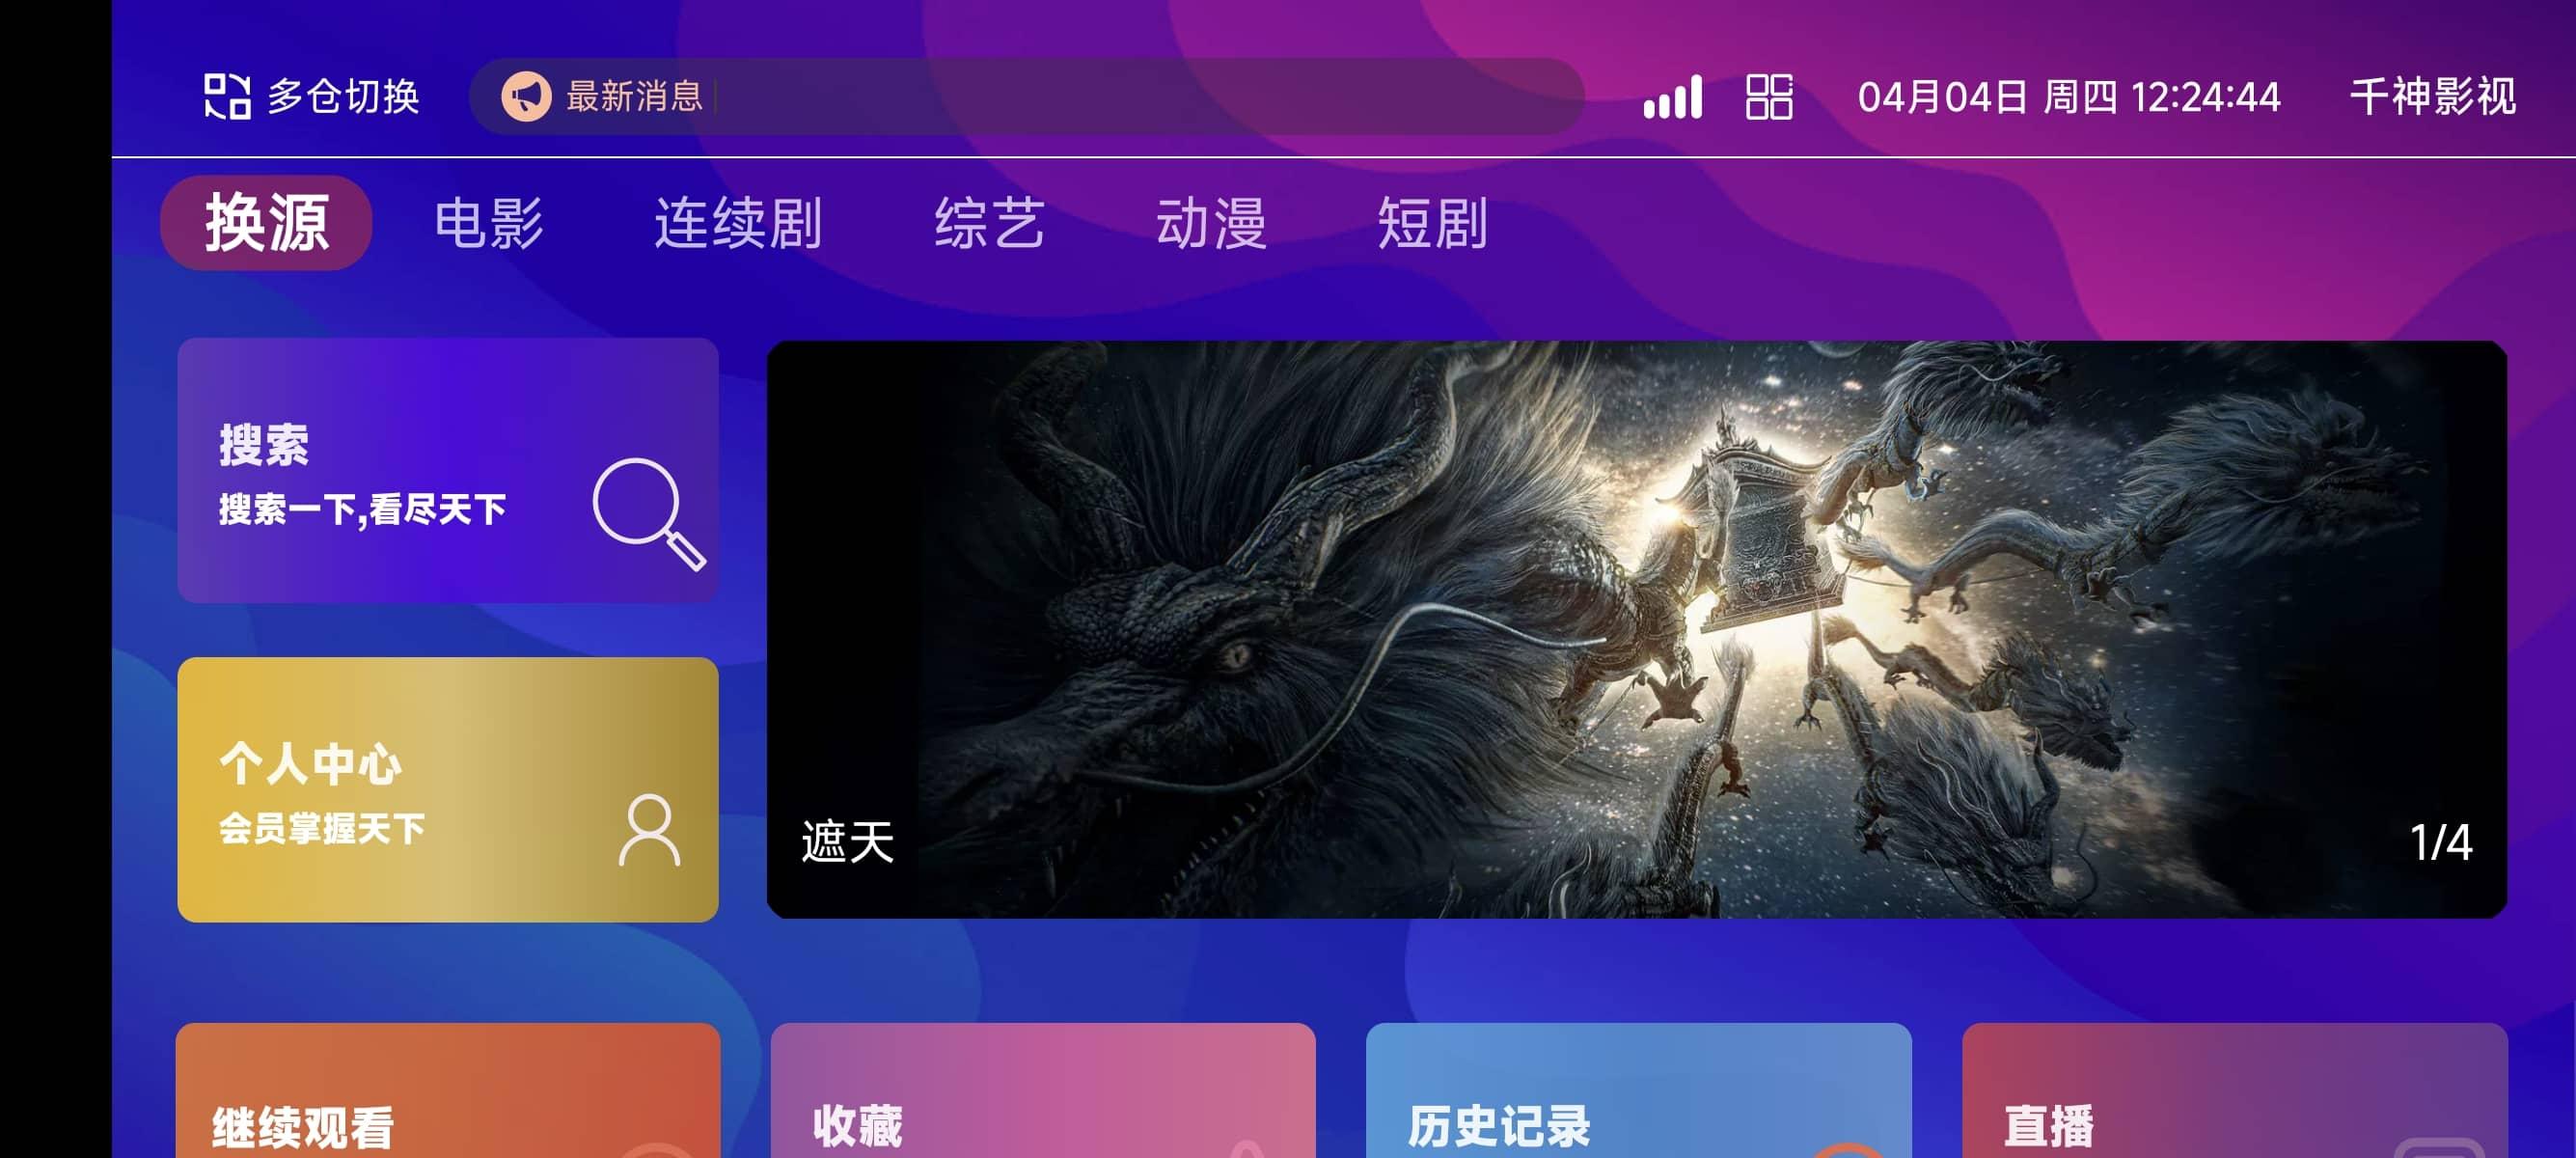 TVBox二次开发影视系统酷点1.4.4反编译版本